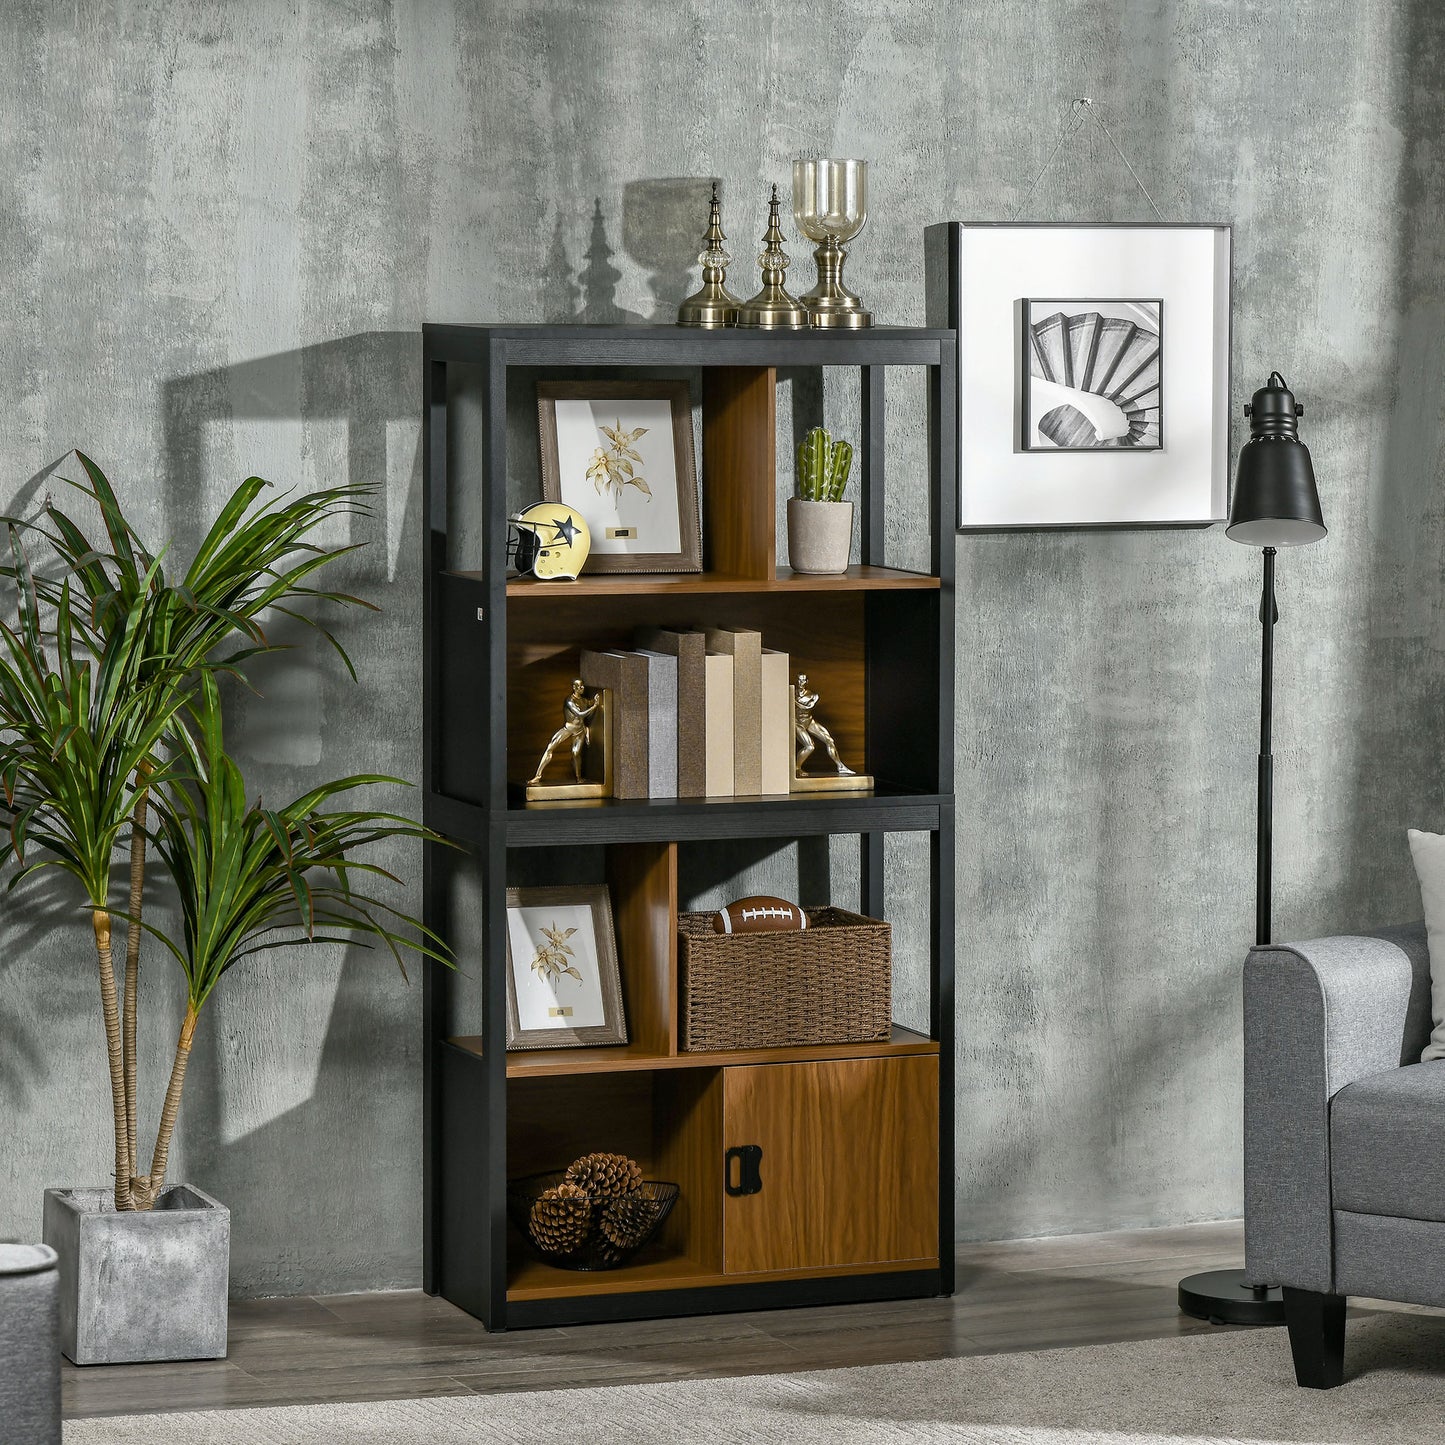 HOMCOM Modern 4-Tier Bookshelf with Storage Shelving and Closed Cabinet Walnut Brown